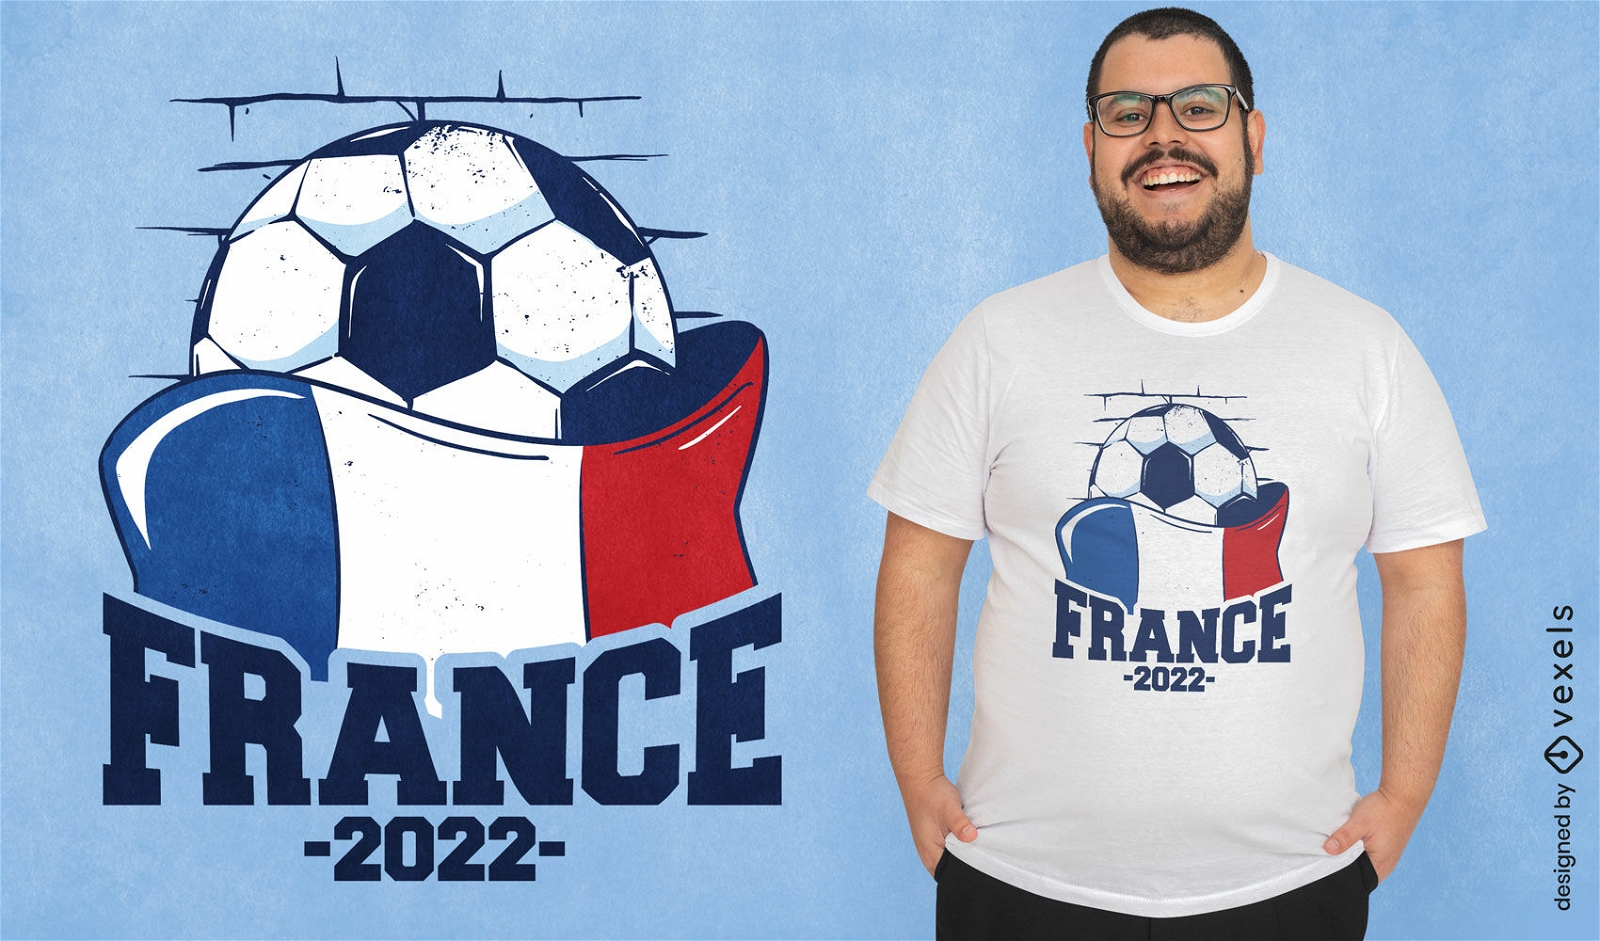 France flag and soccer ball t-shirt design